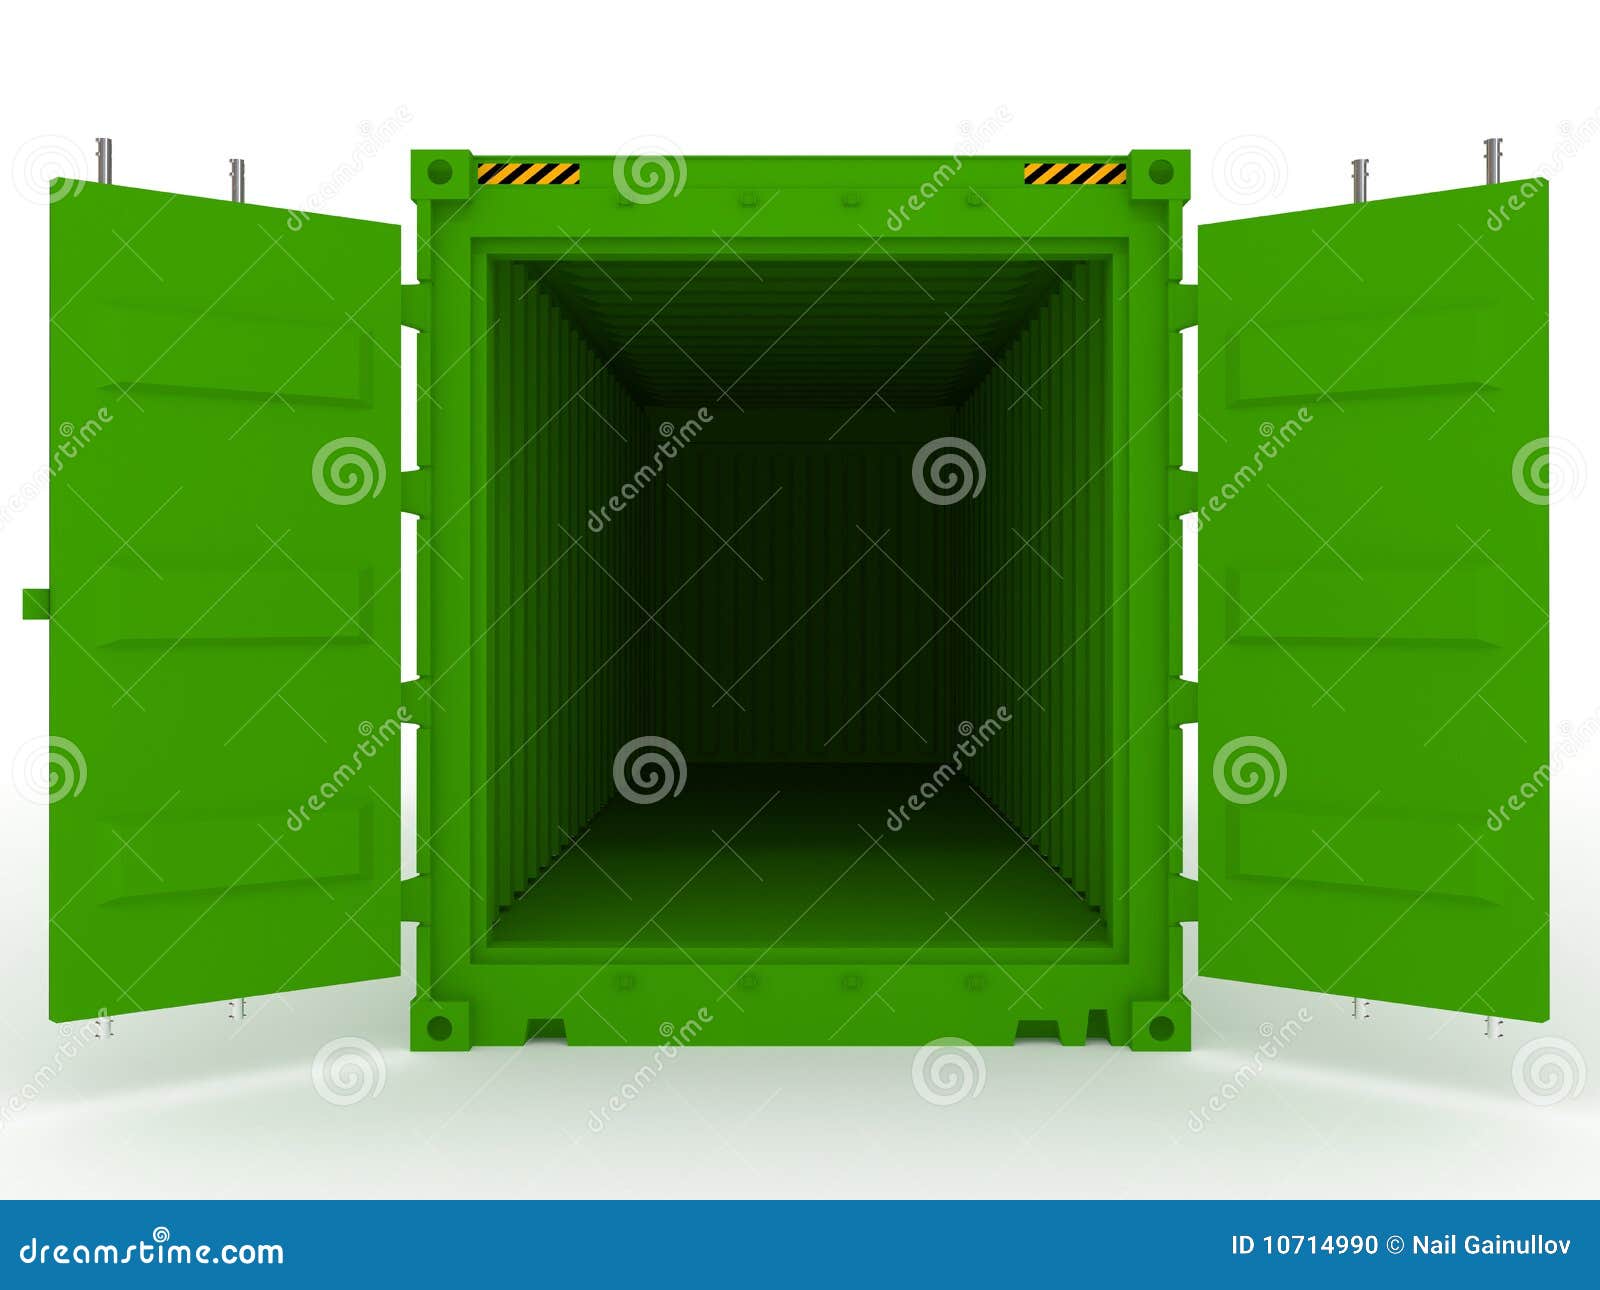 open green cargo container